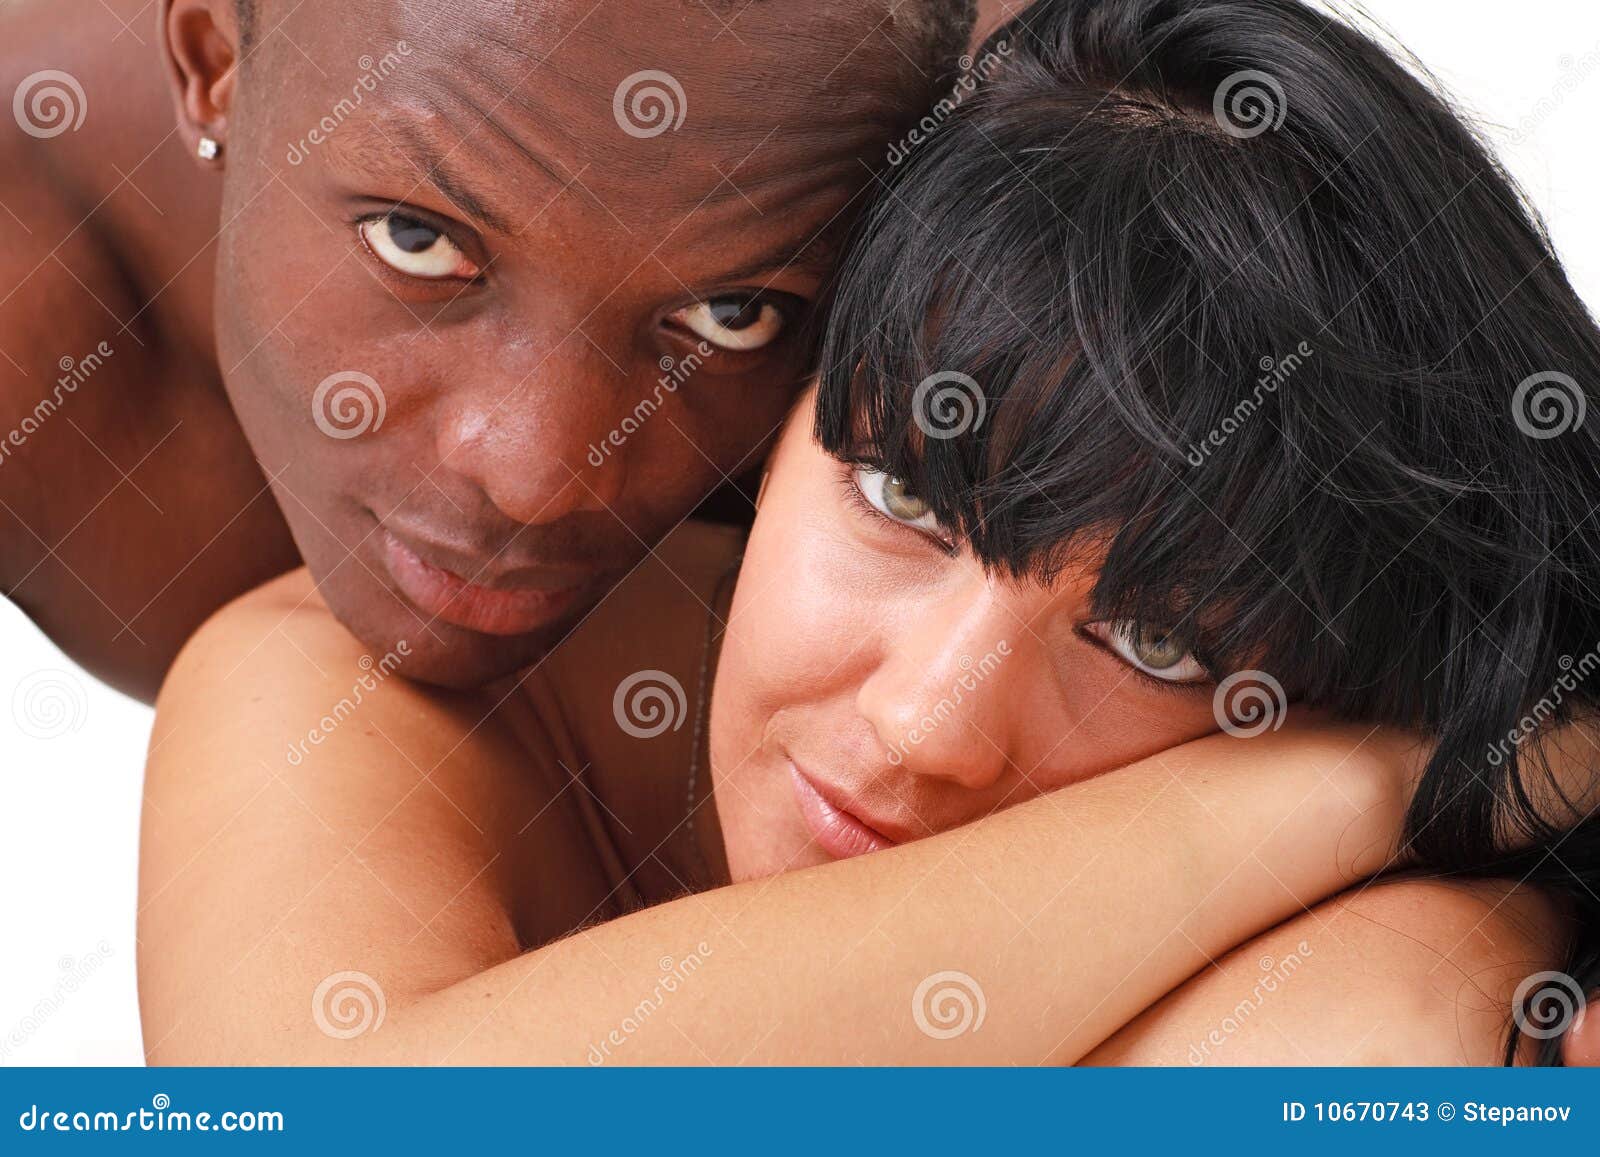 white wife black dude Sex Pics Hd